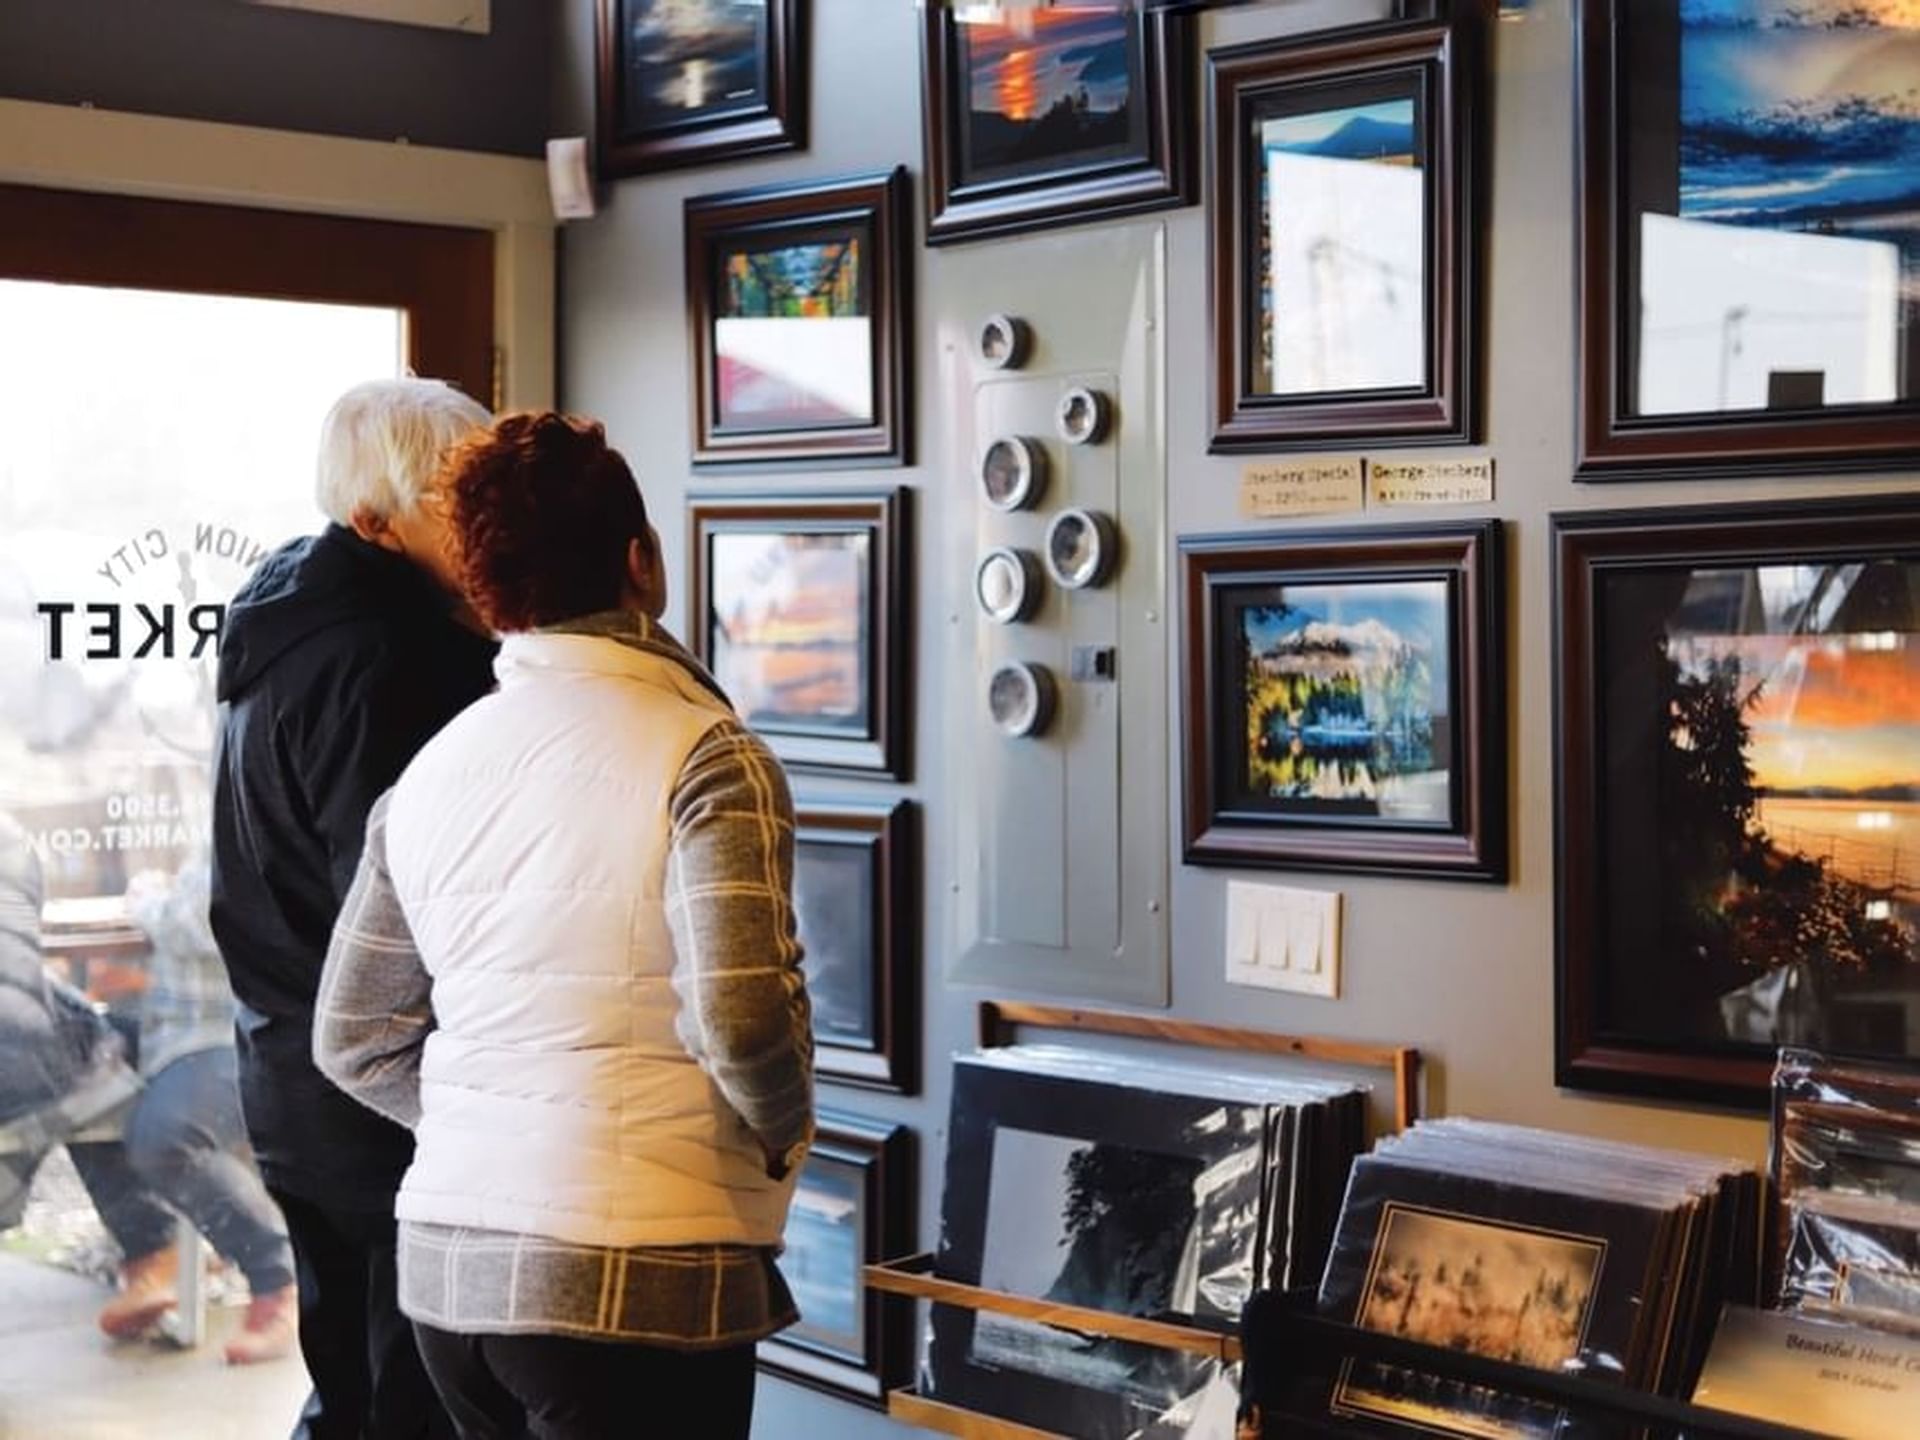 People observing the Art in Union City Market near Alderbrook Resort & Spa